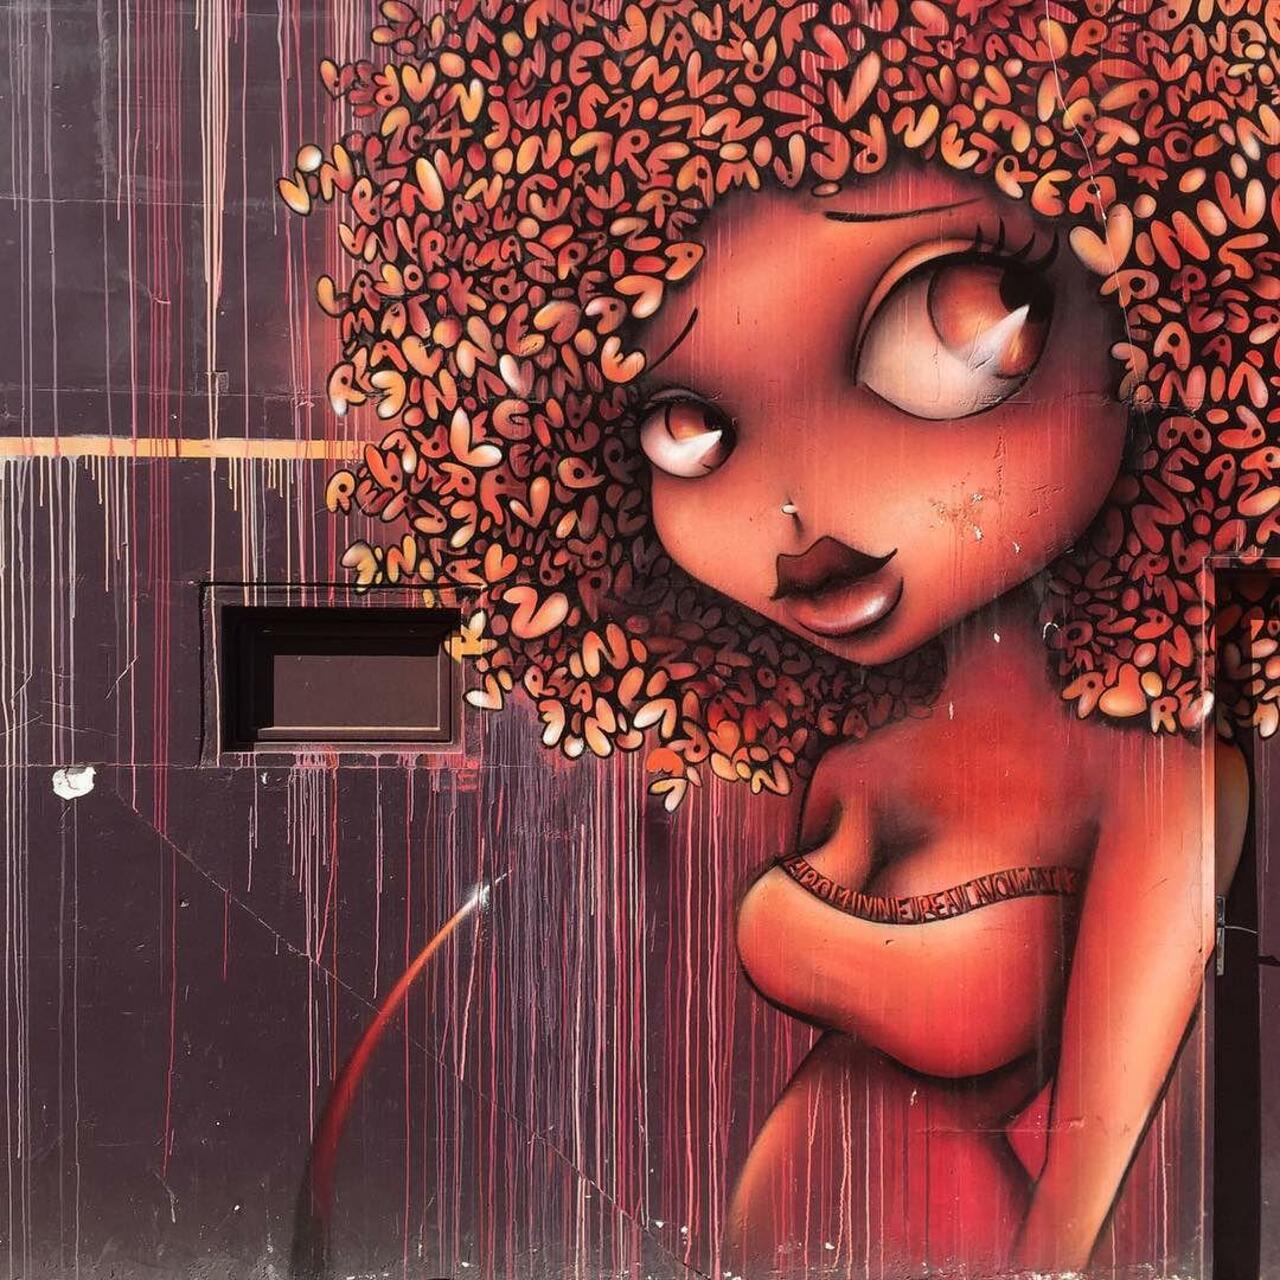 #Paris #graffiti photo by @catscoffeecreativity http://ift.tt/1K7Oki3 #StreetArt http://t.co/PKaIEem3WZ